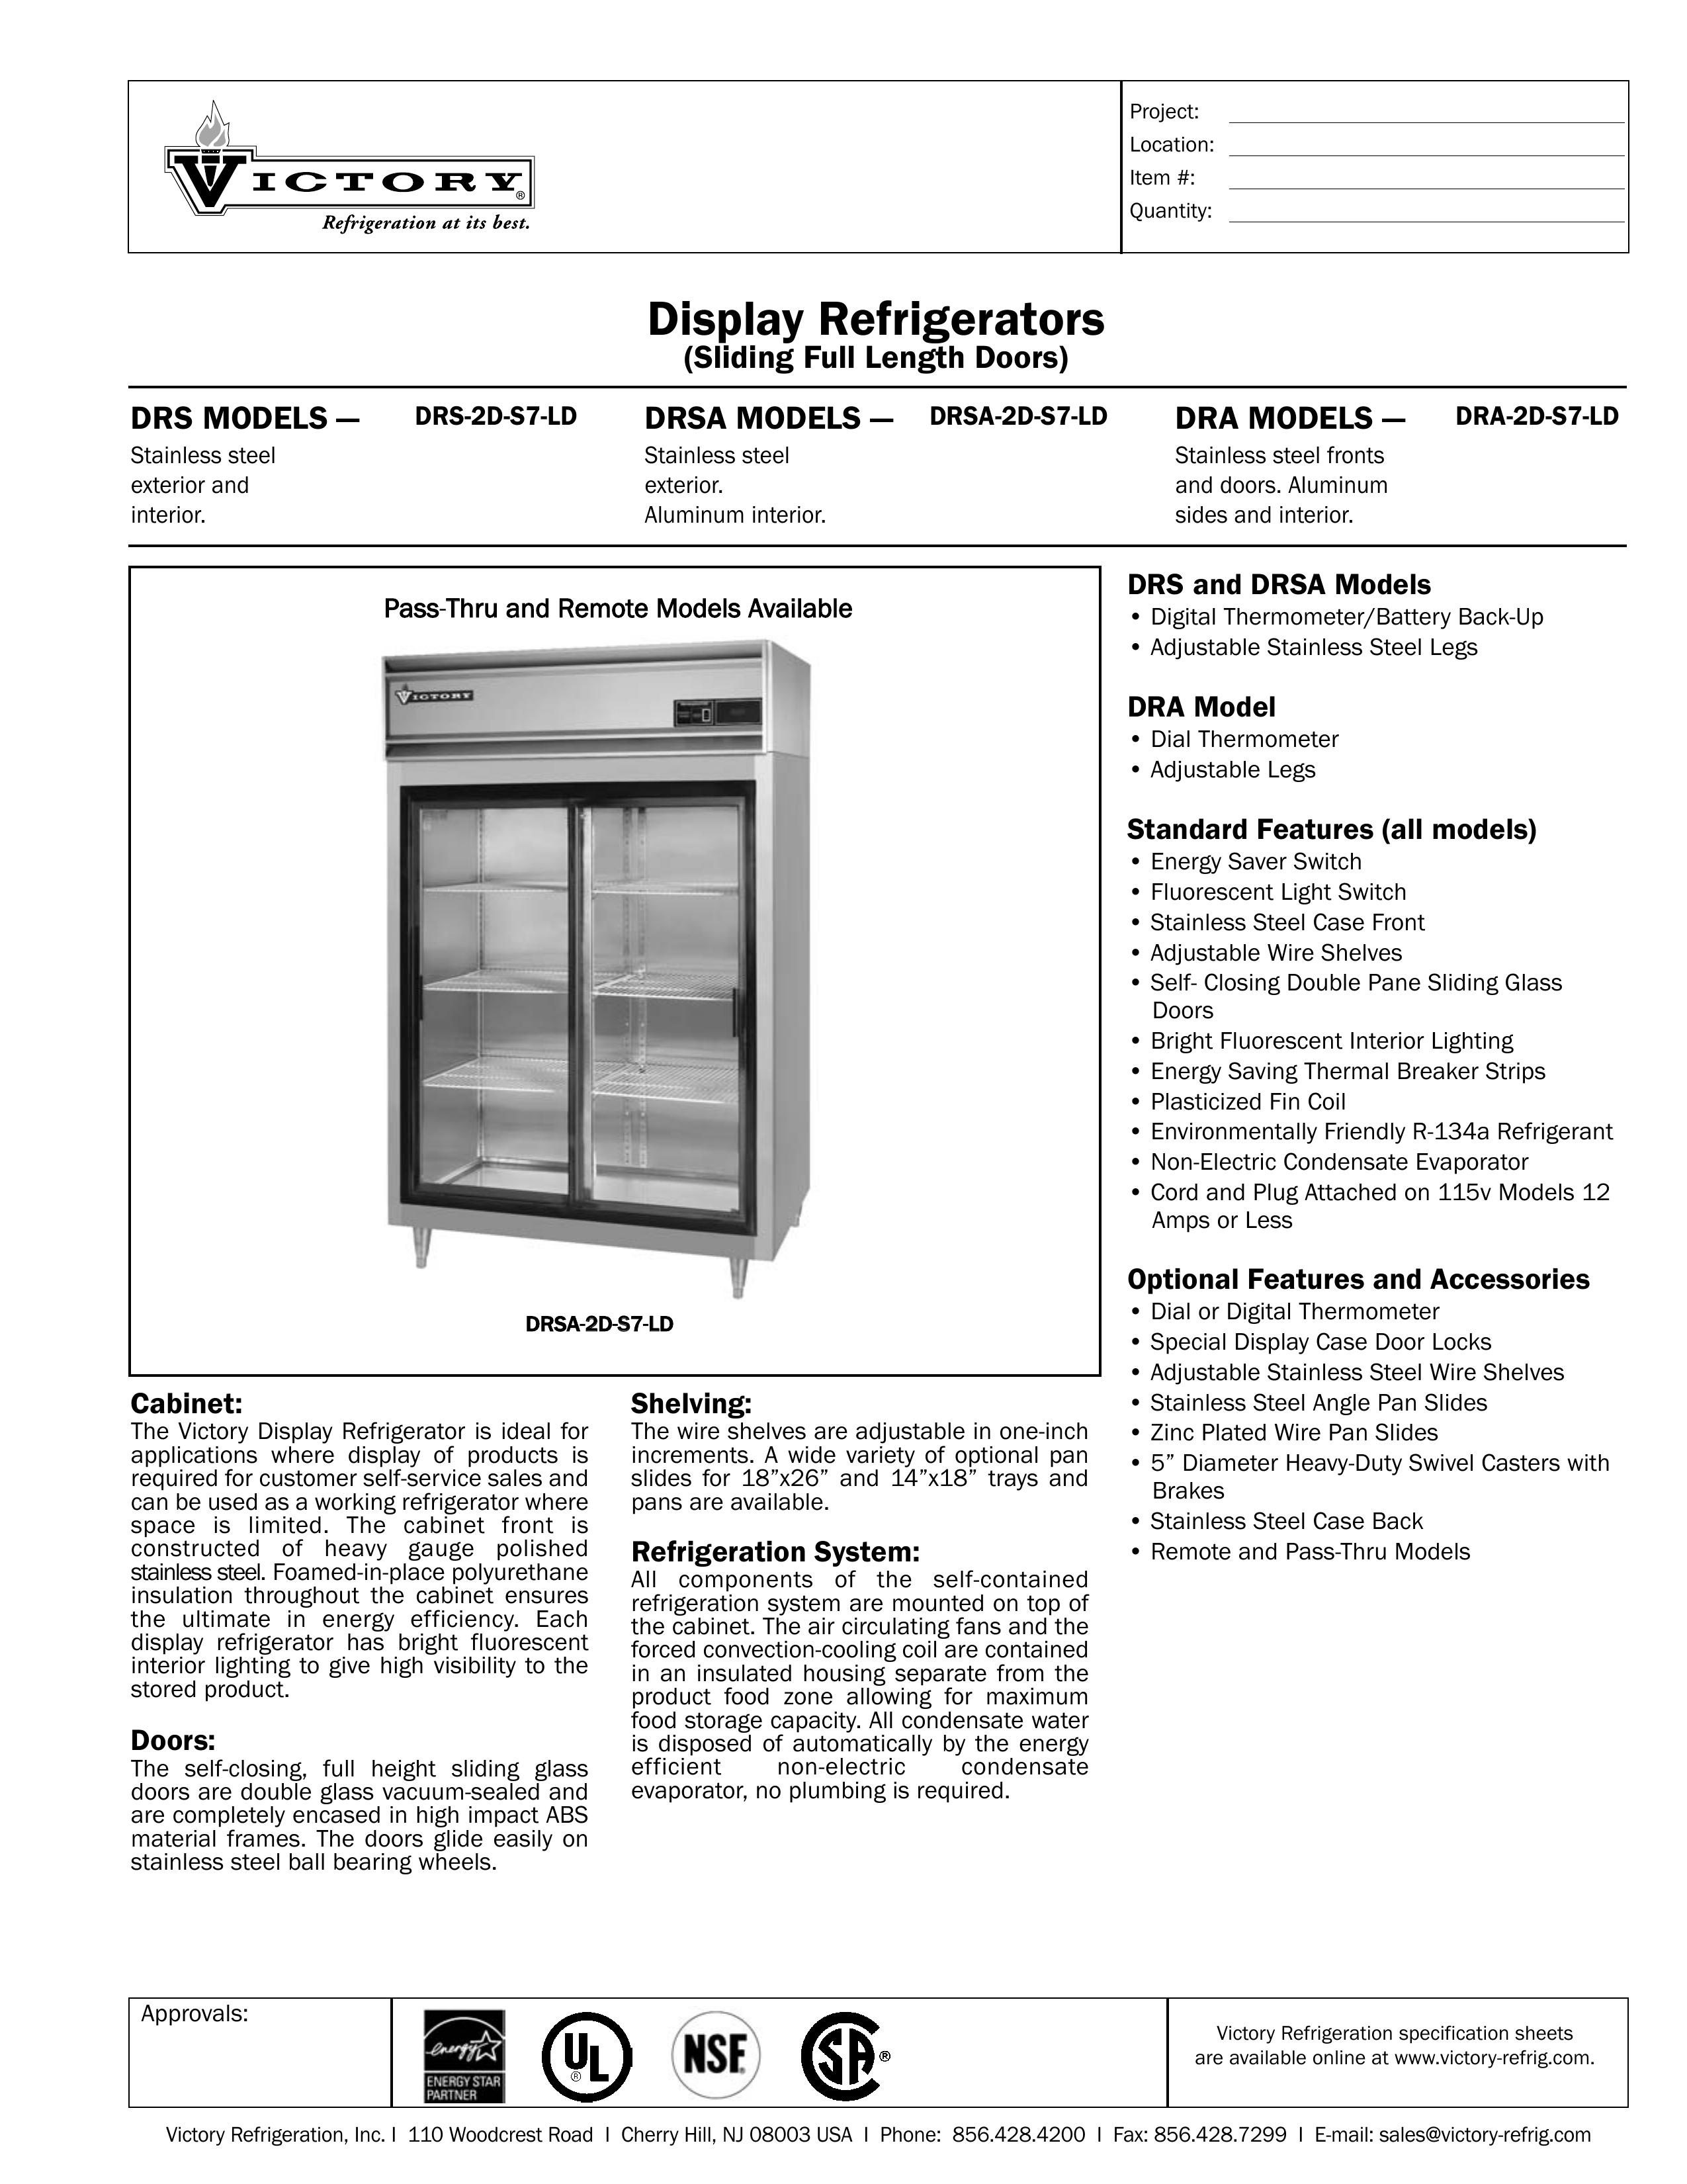 Victory Refrigeration DRS-2D-S7-LD Refrigerator User Manual